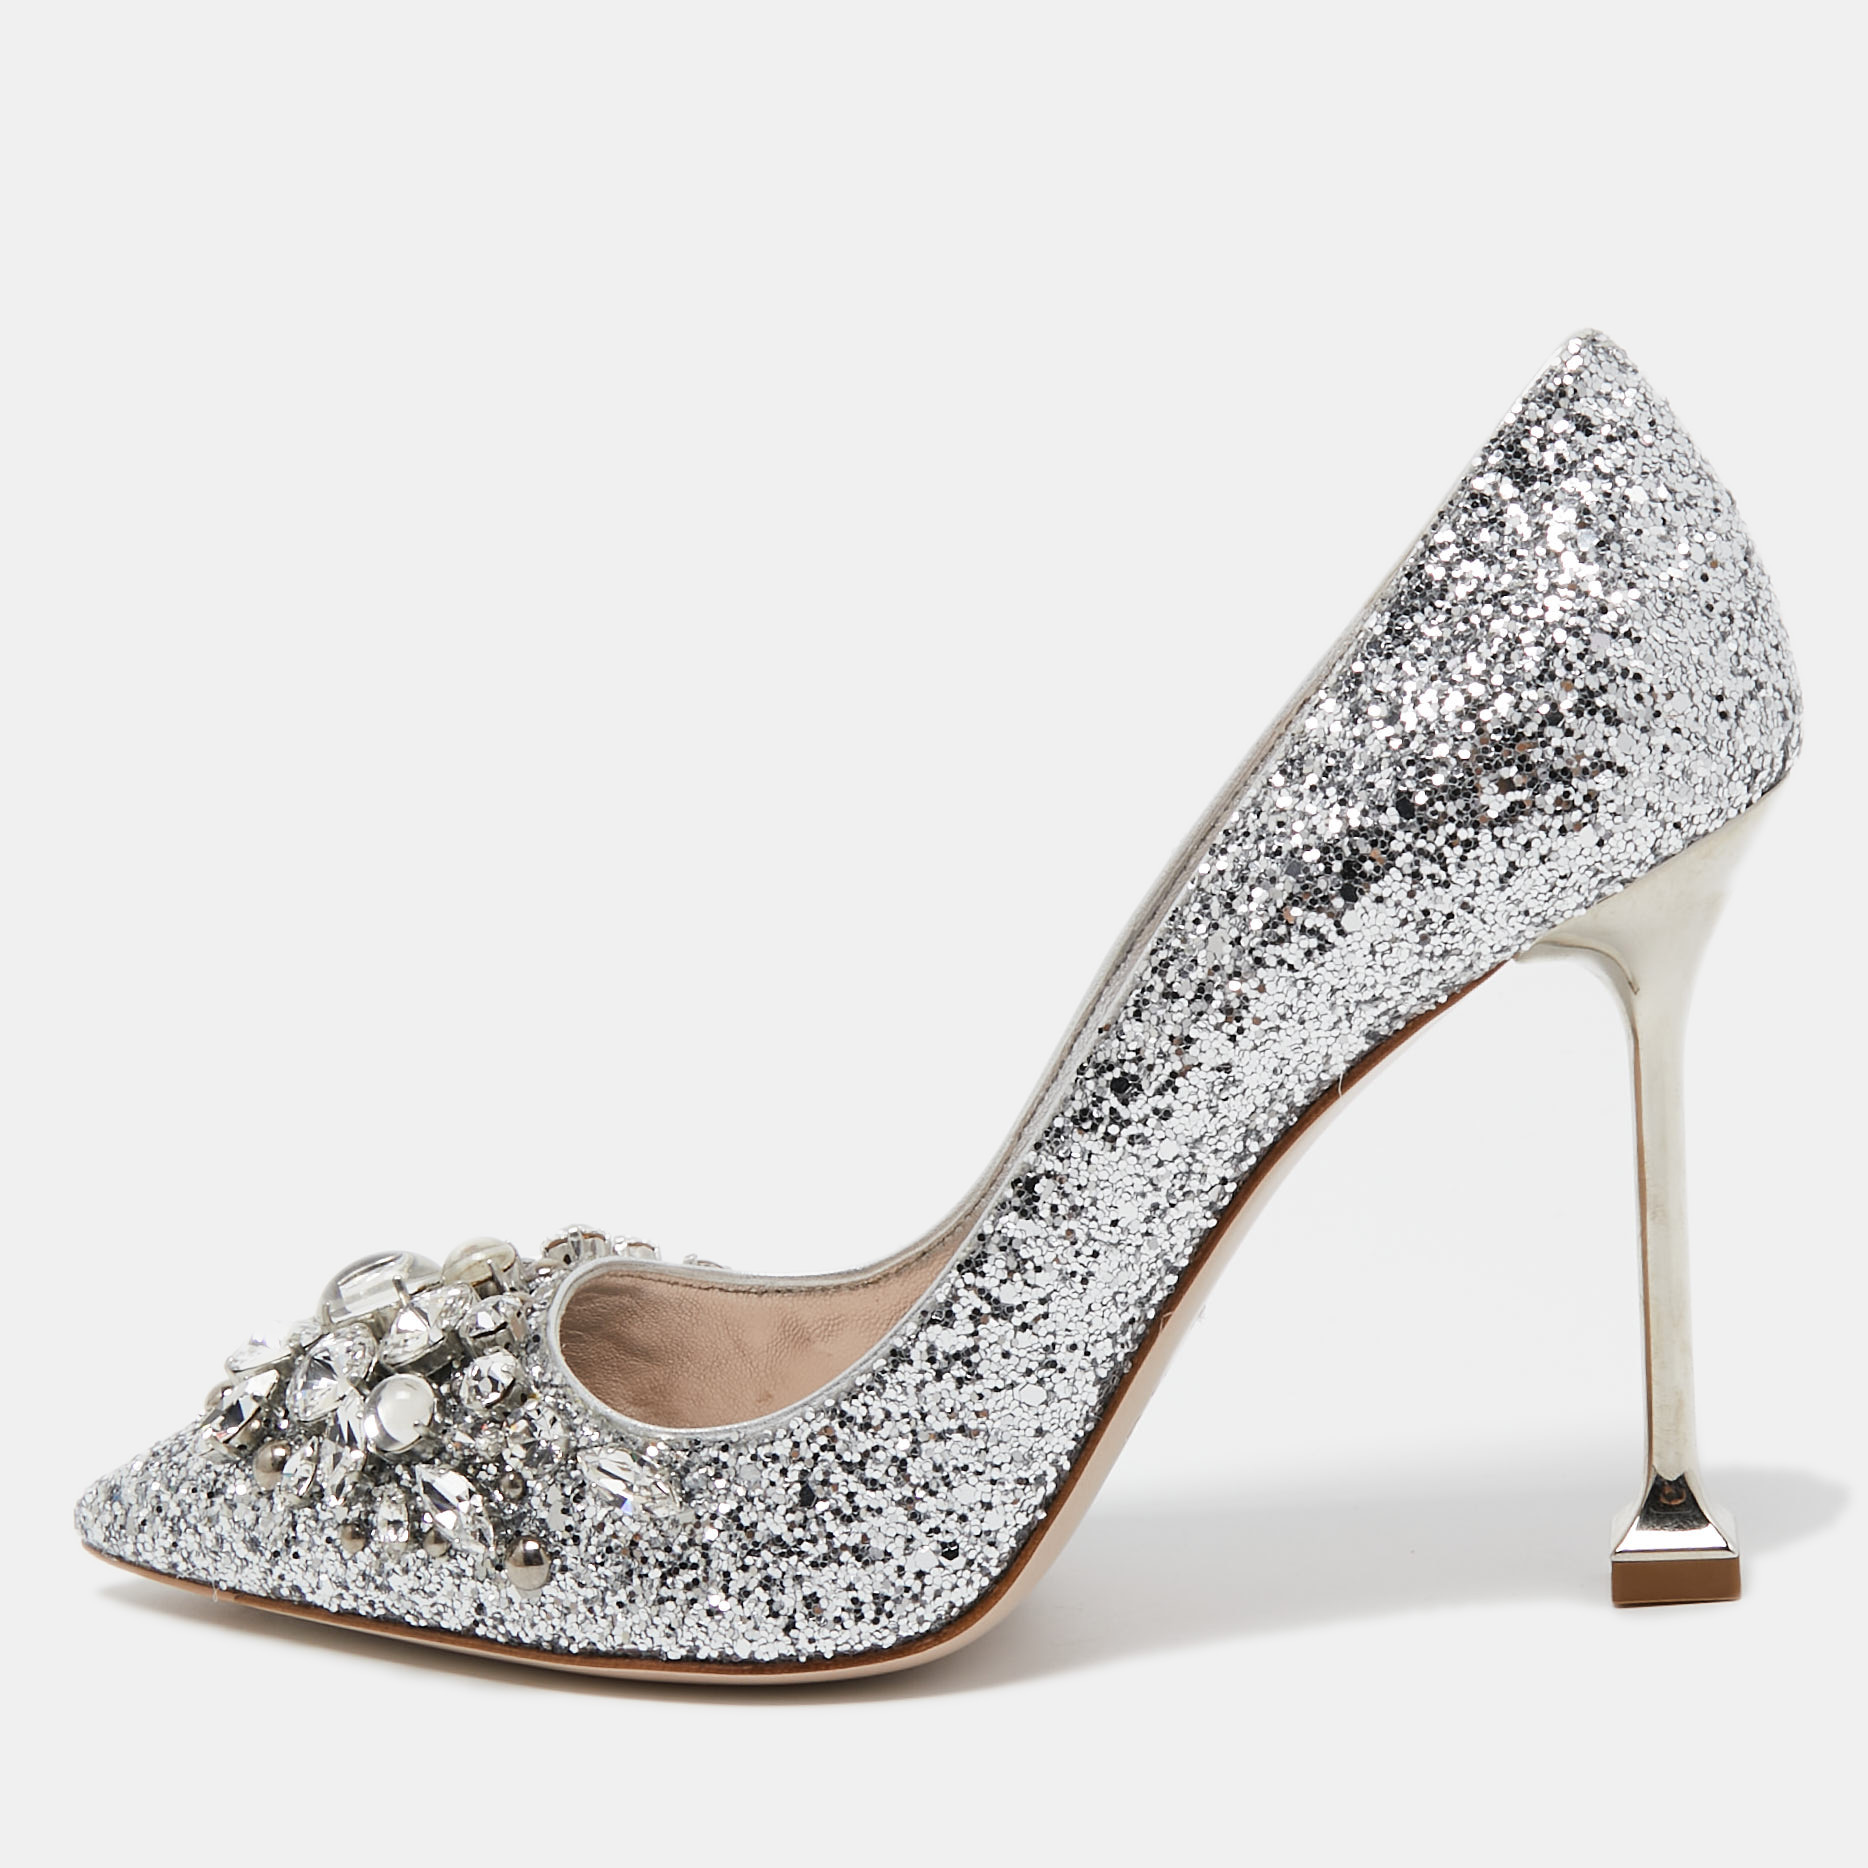 Miu Miu Silver Glitter Crystal Embellished Pointed Toe Pumps Size 35.5